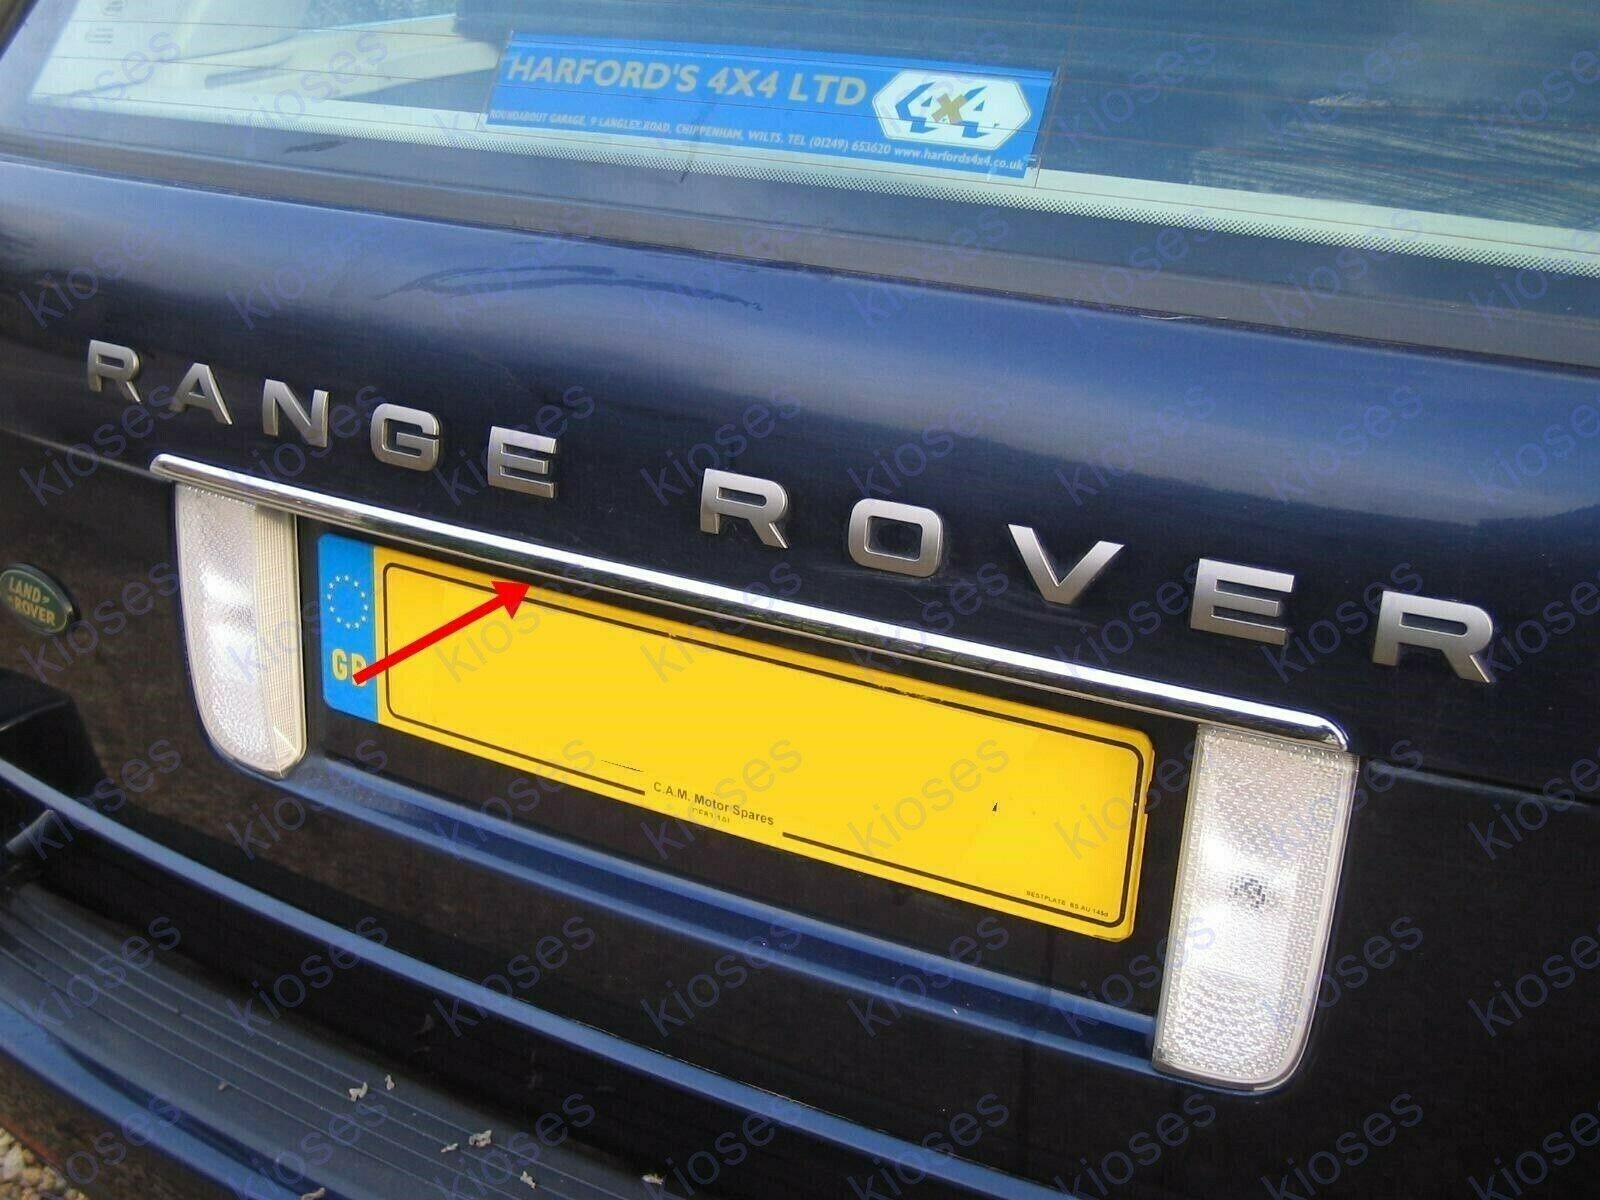 Range Rover L322 Chrome Rear Trunk Tailgate Trim Cover S.STEEL 2002-2013